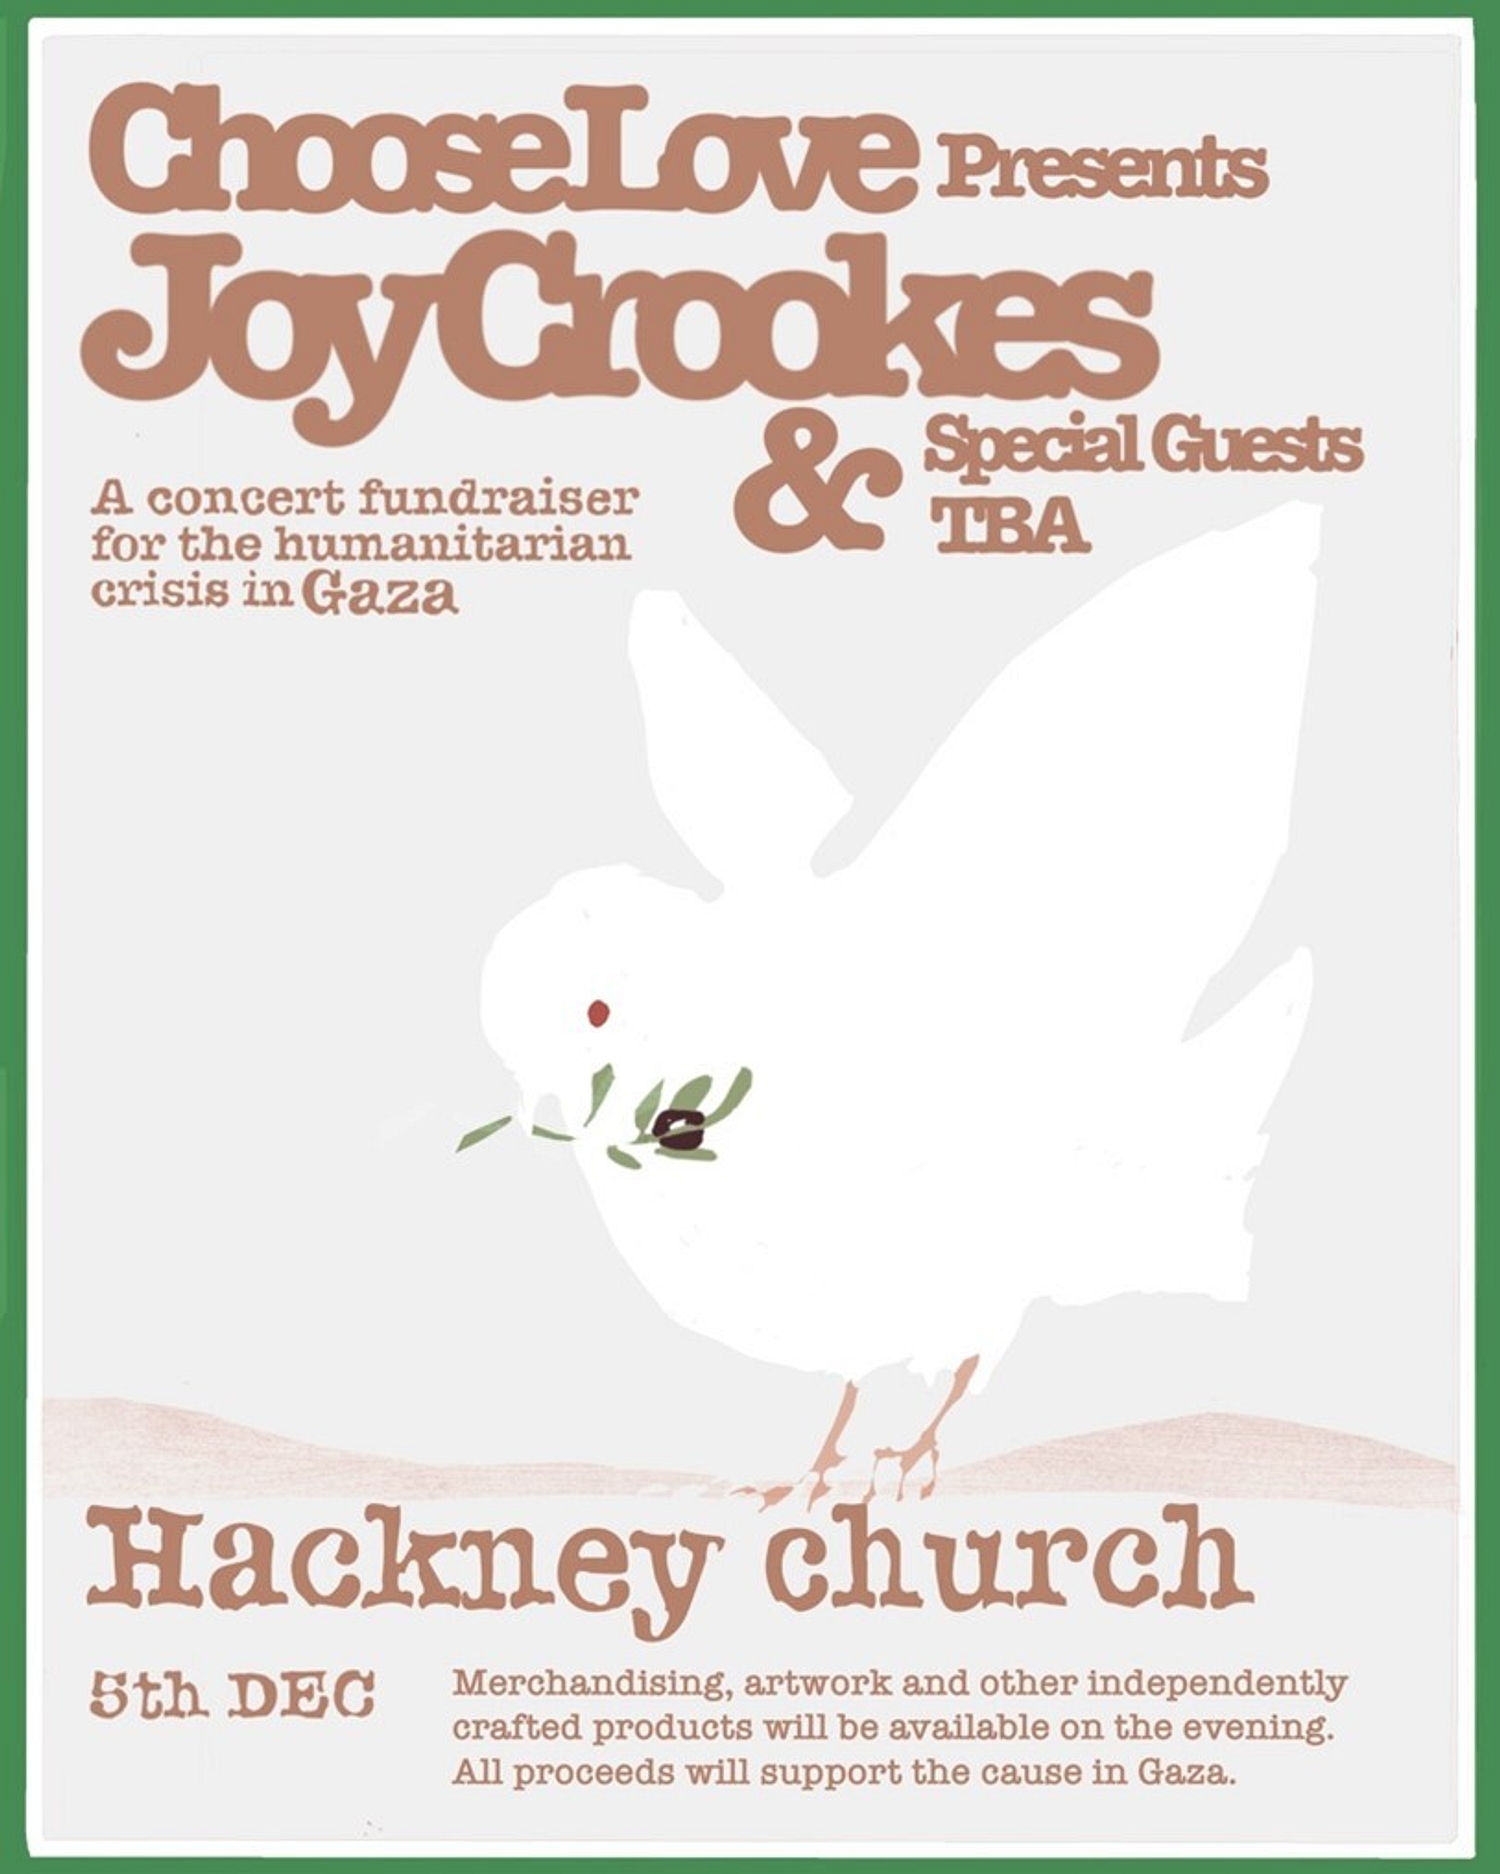 Joy Crookes announces Choose Love fundraiser gig for Gaza humanitarian crisis